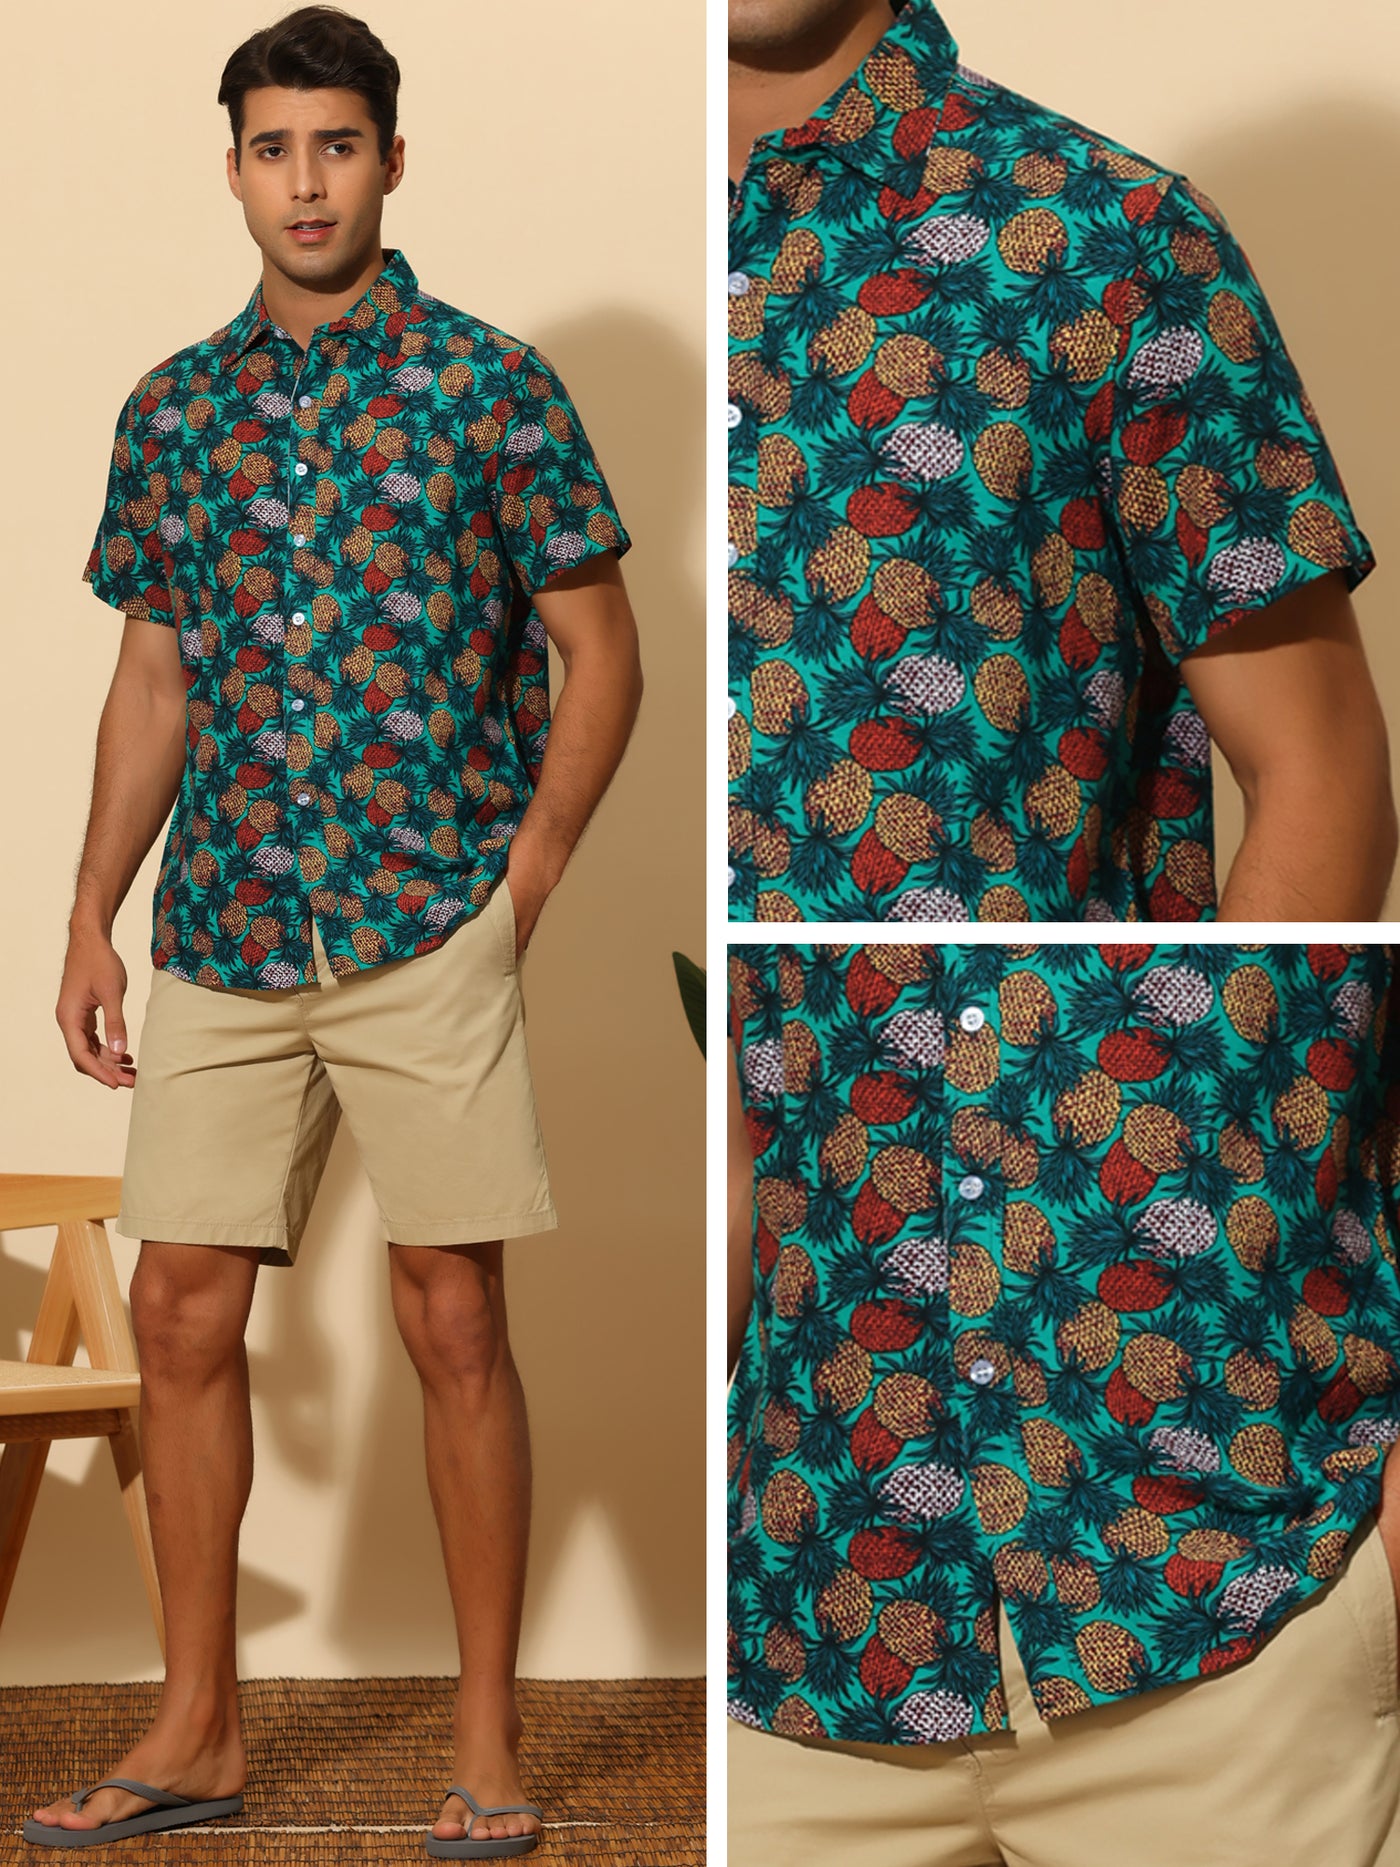 Bublédon Pineapple Print Shirt for Men's Hawaiian Short Sleeve Tropical Fruit Printed Shirts